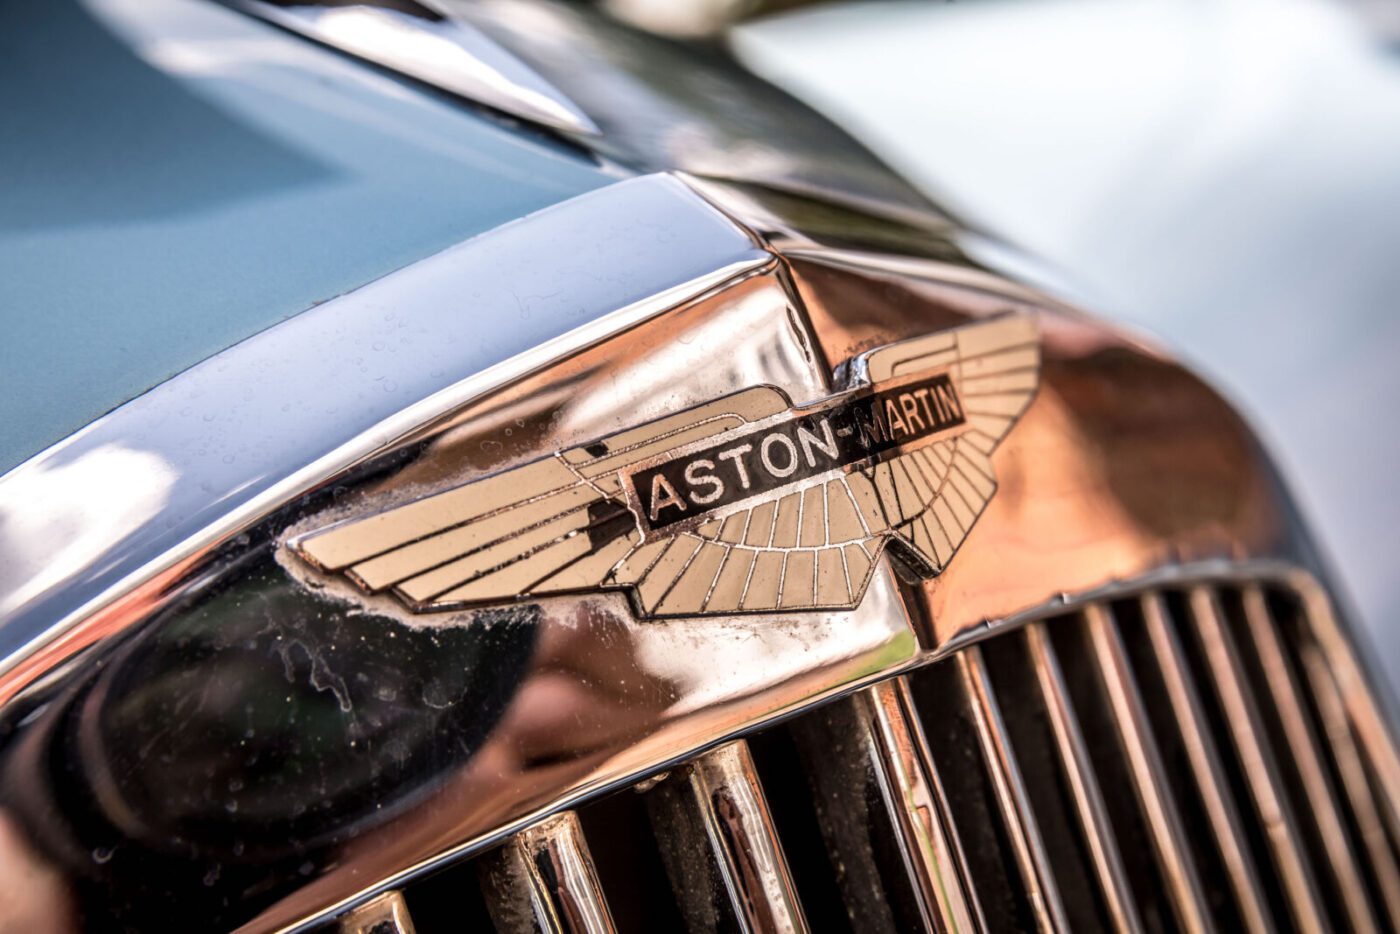 Aston Martin DB1 bonnet badge